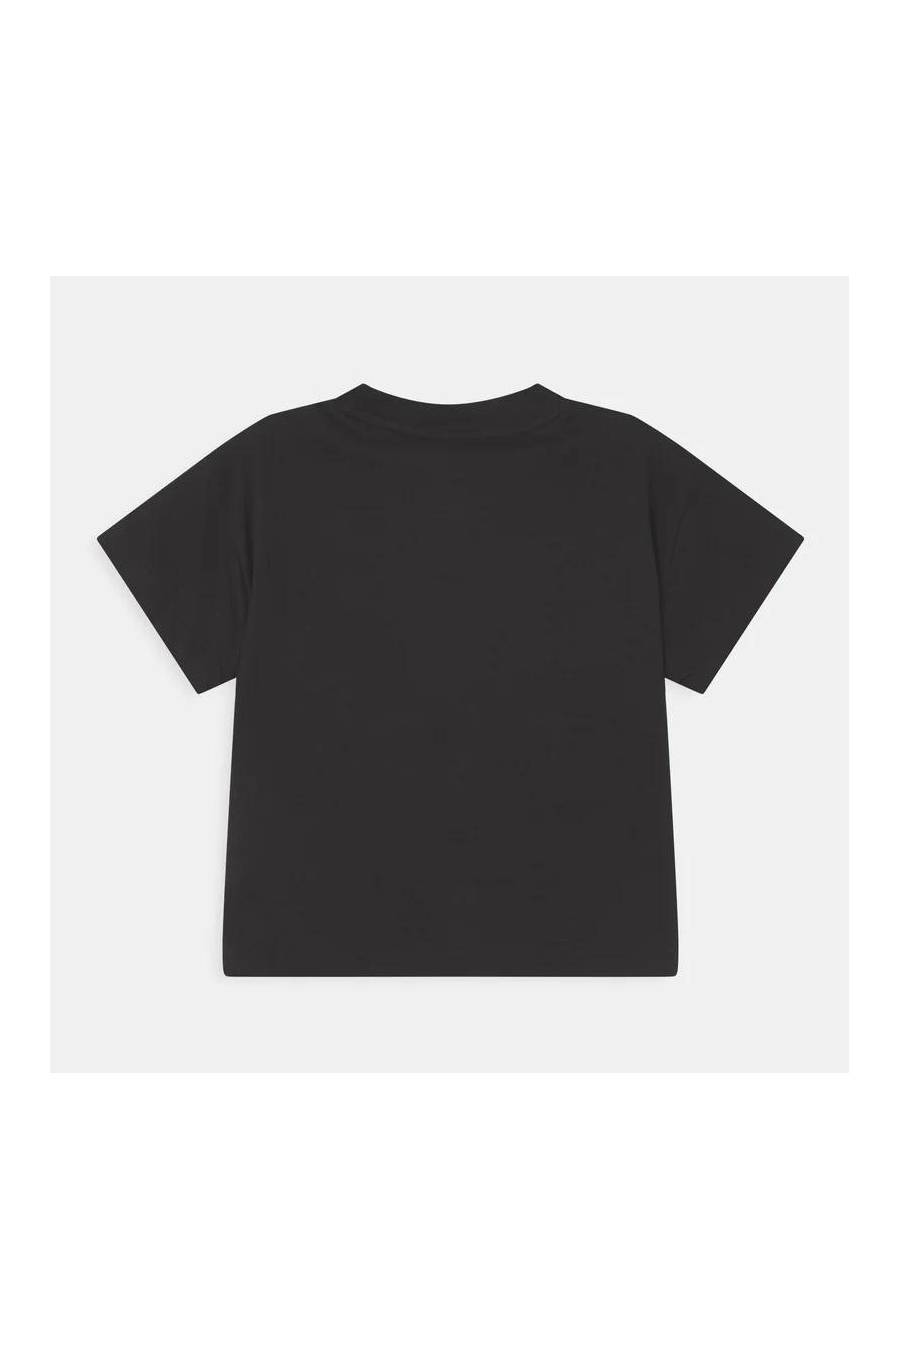 Camiseta Champion Cropped - 404132-KK001 - Msdsport by Masdeporte